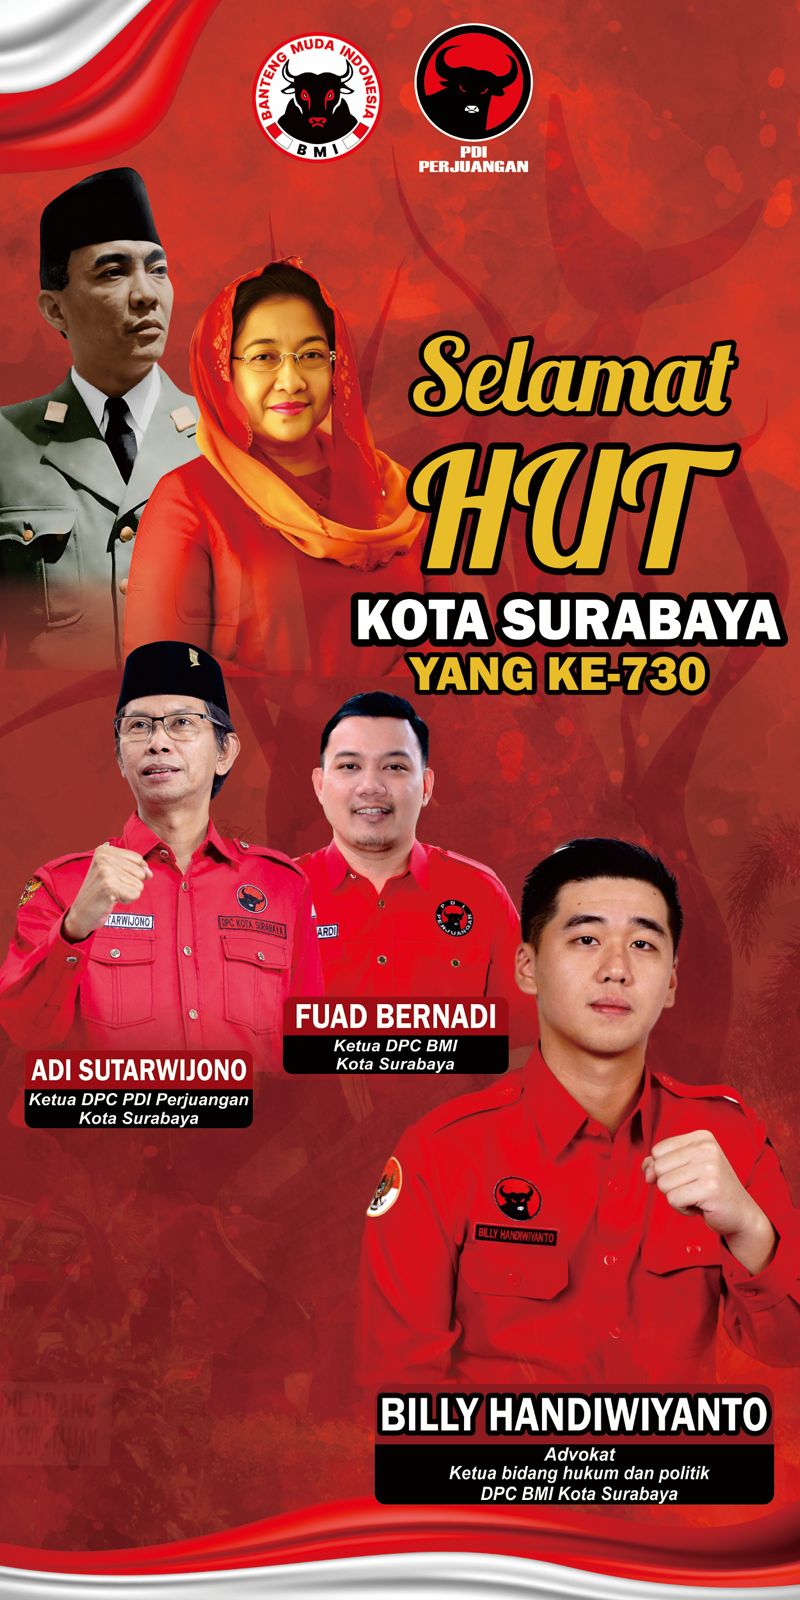 Billy Handiwiyanto Mengucapkan Selamat HUT ke-730 Kota Surabaya